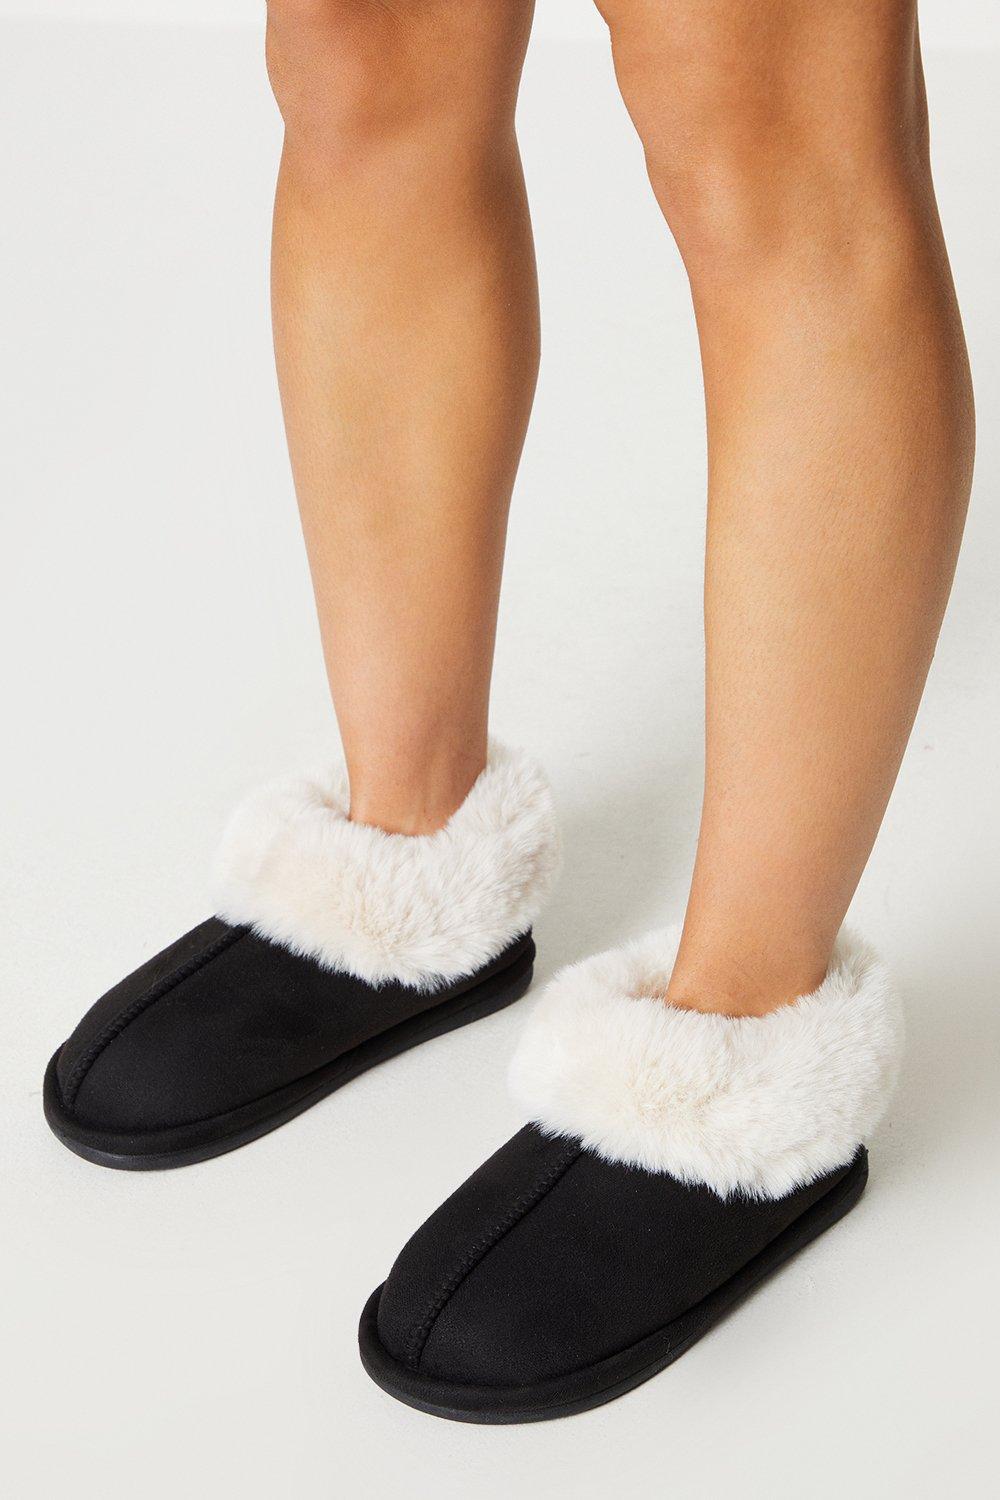 Women’s Maggi Faux Fur Sheepskin Fur Bootie Slippers - natural black - 8